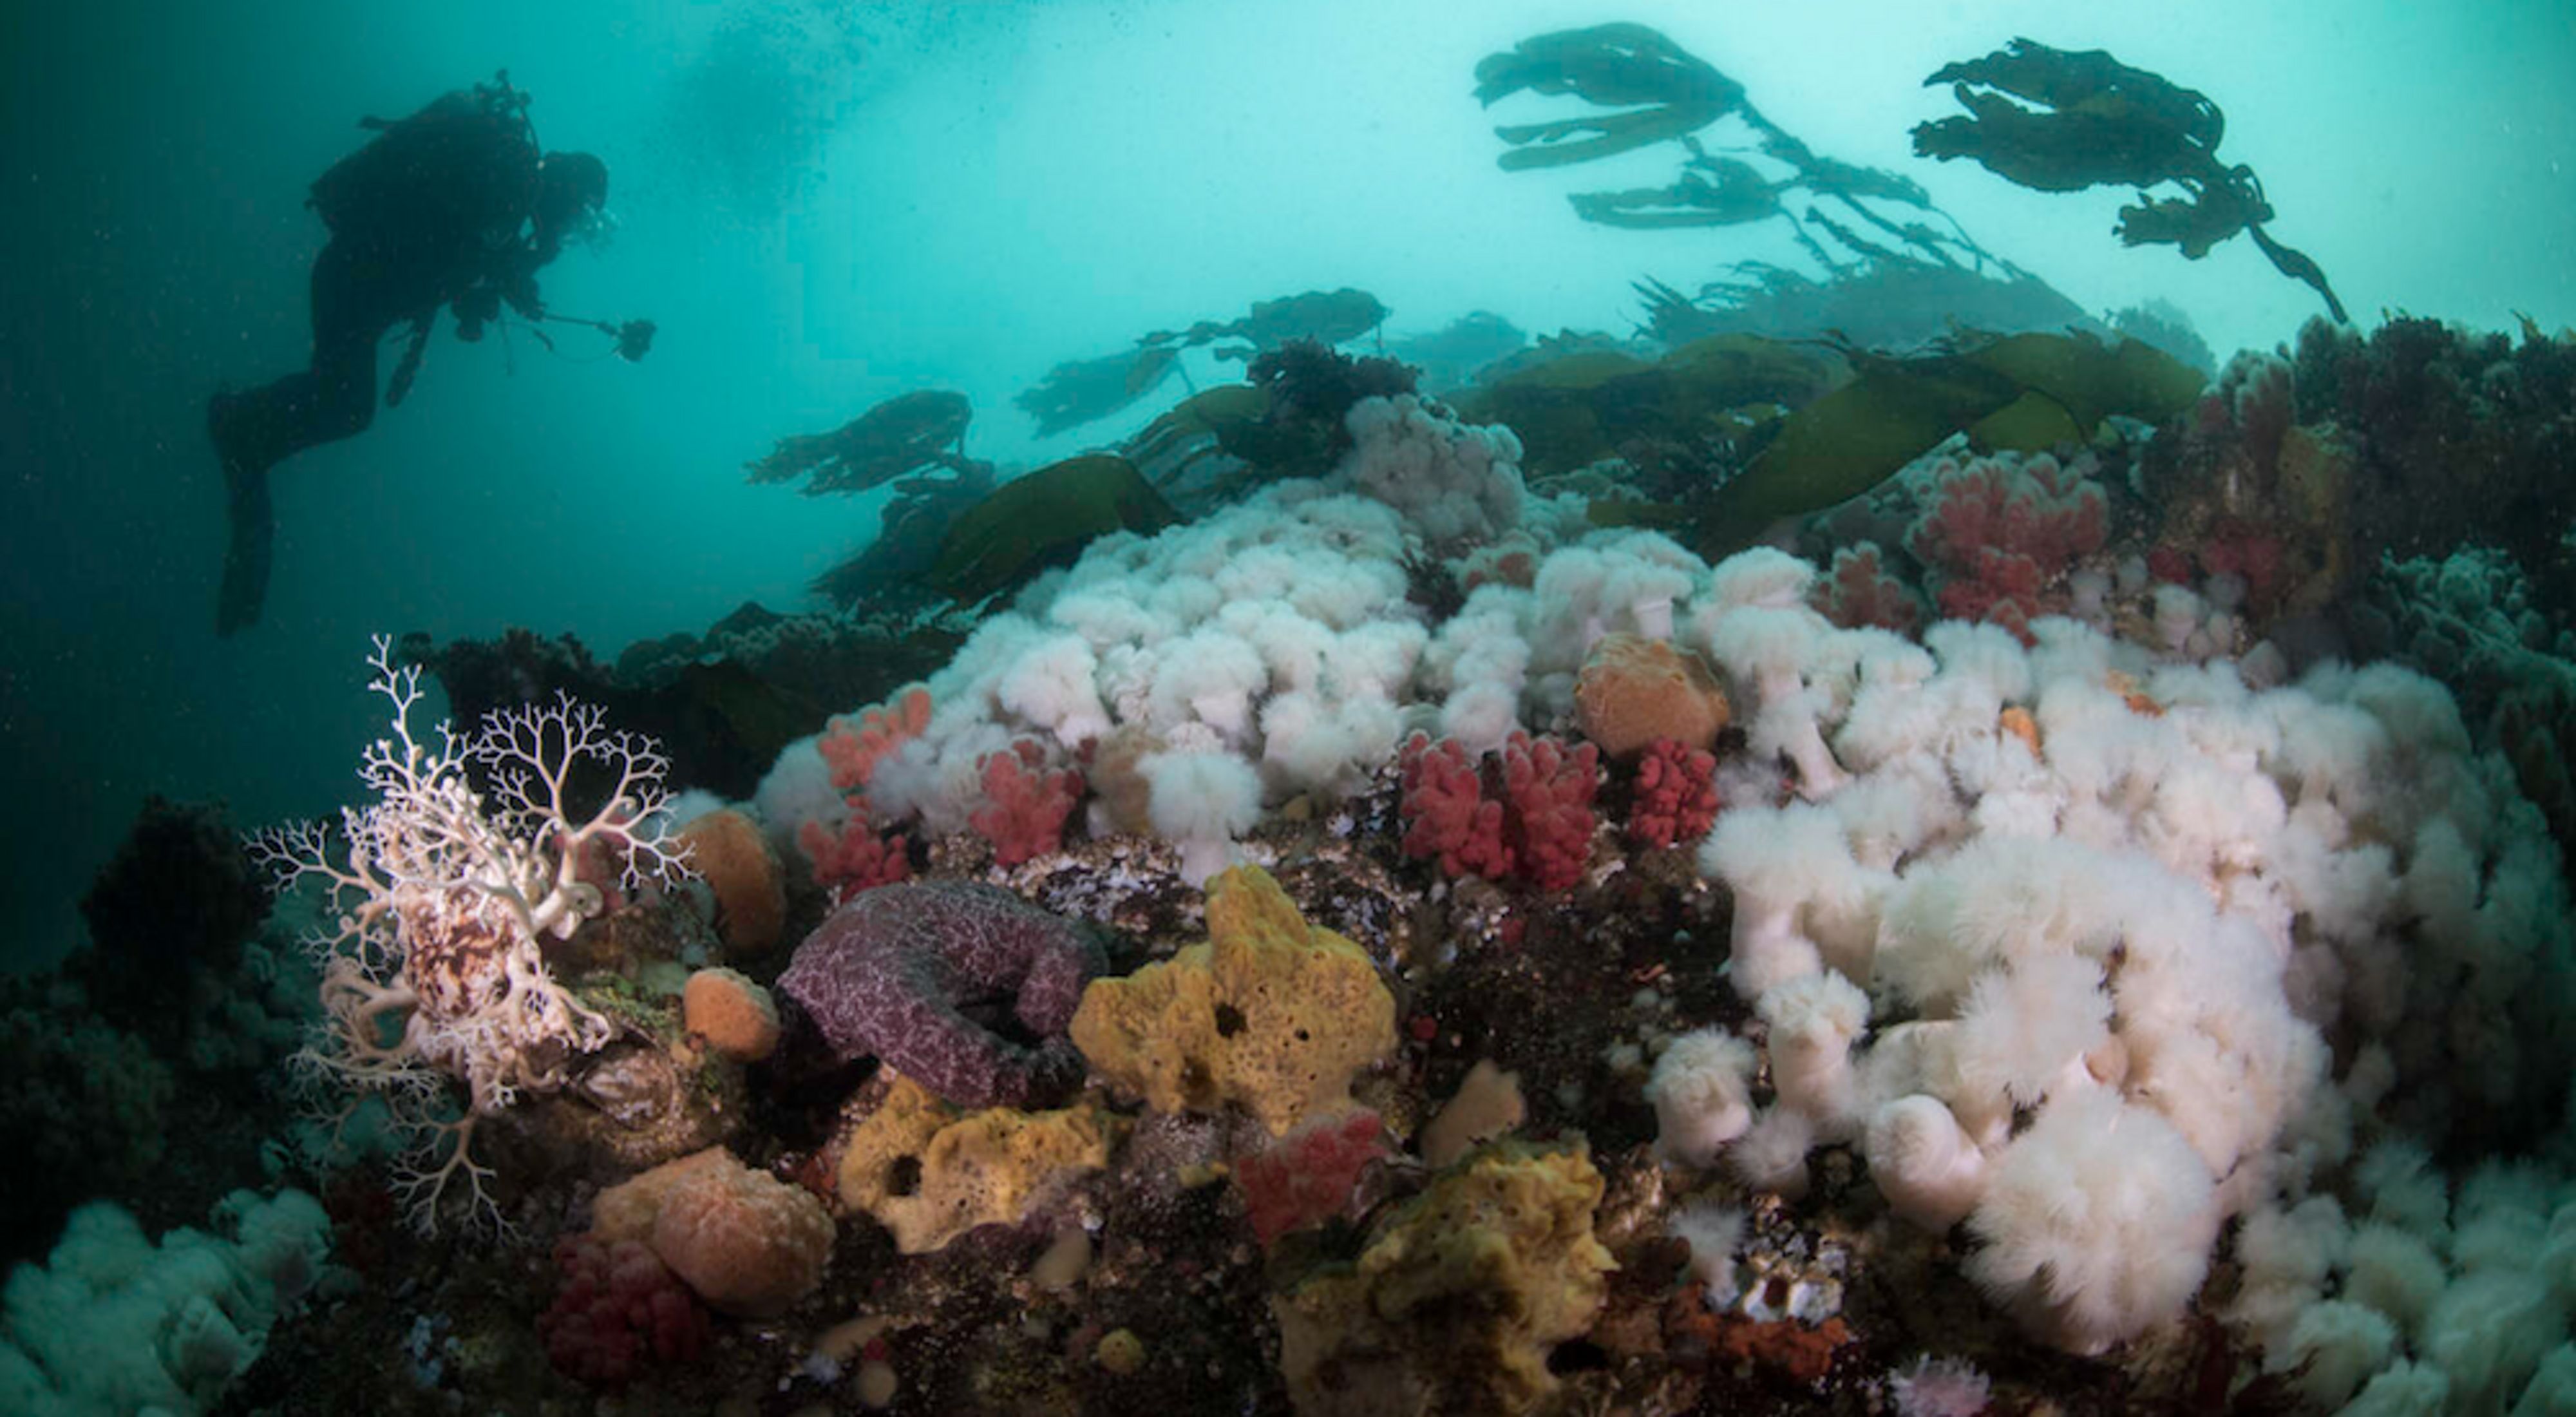 Kelp, corals, and a scuba diver in the ocean.